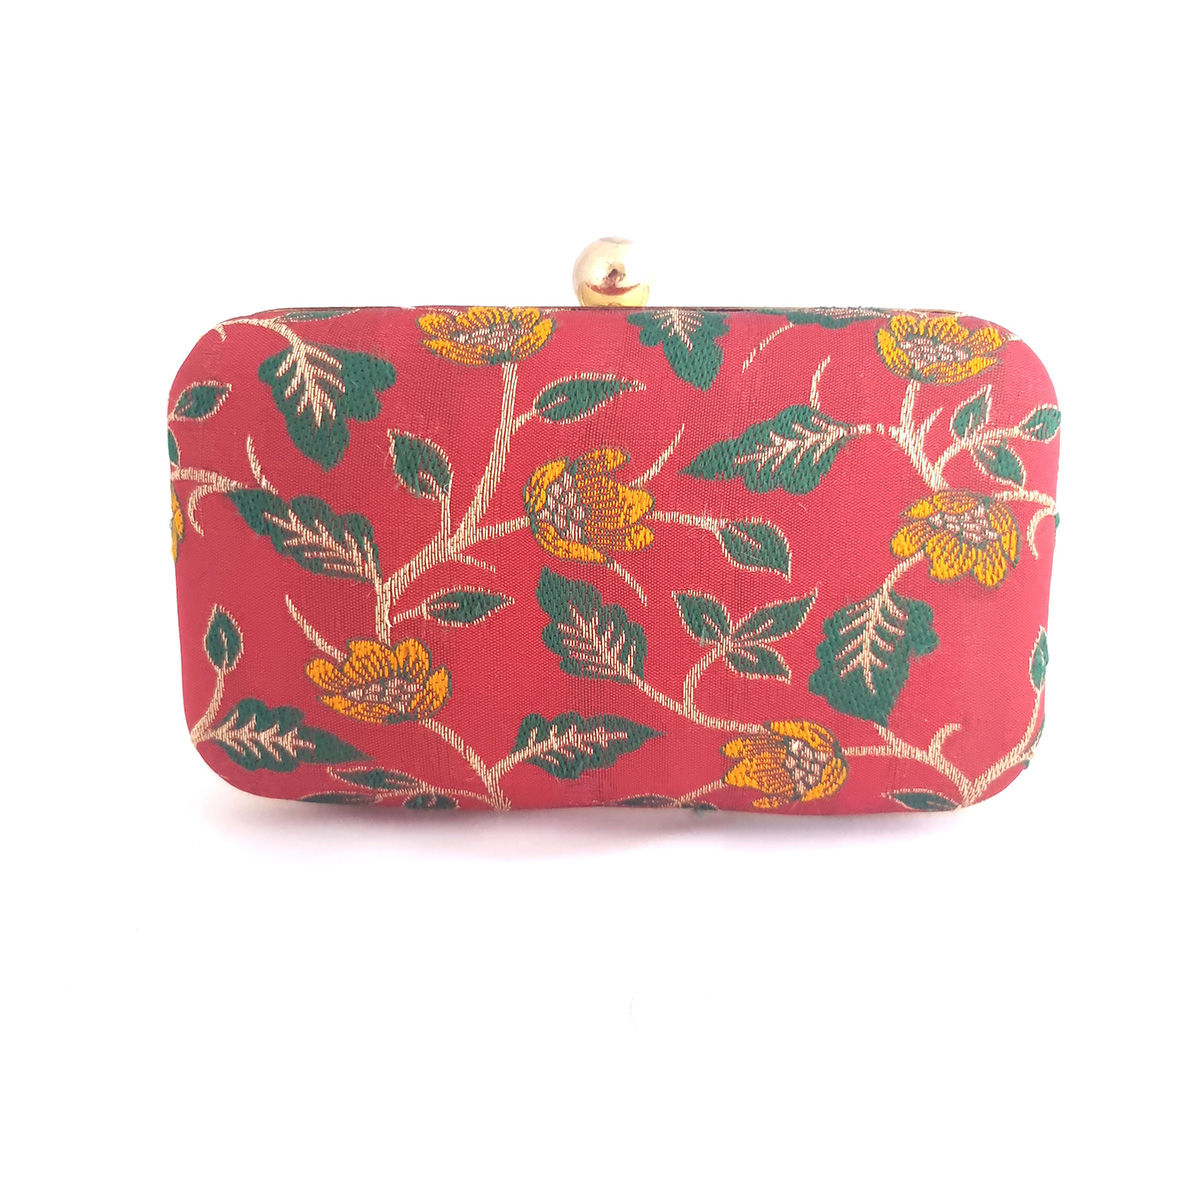 Make-up bag. Red flower - Maria - cosmetic purse - Viola Sky